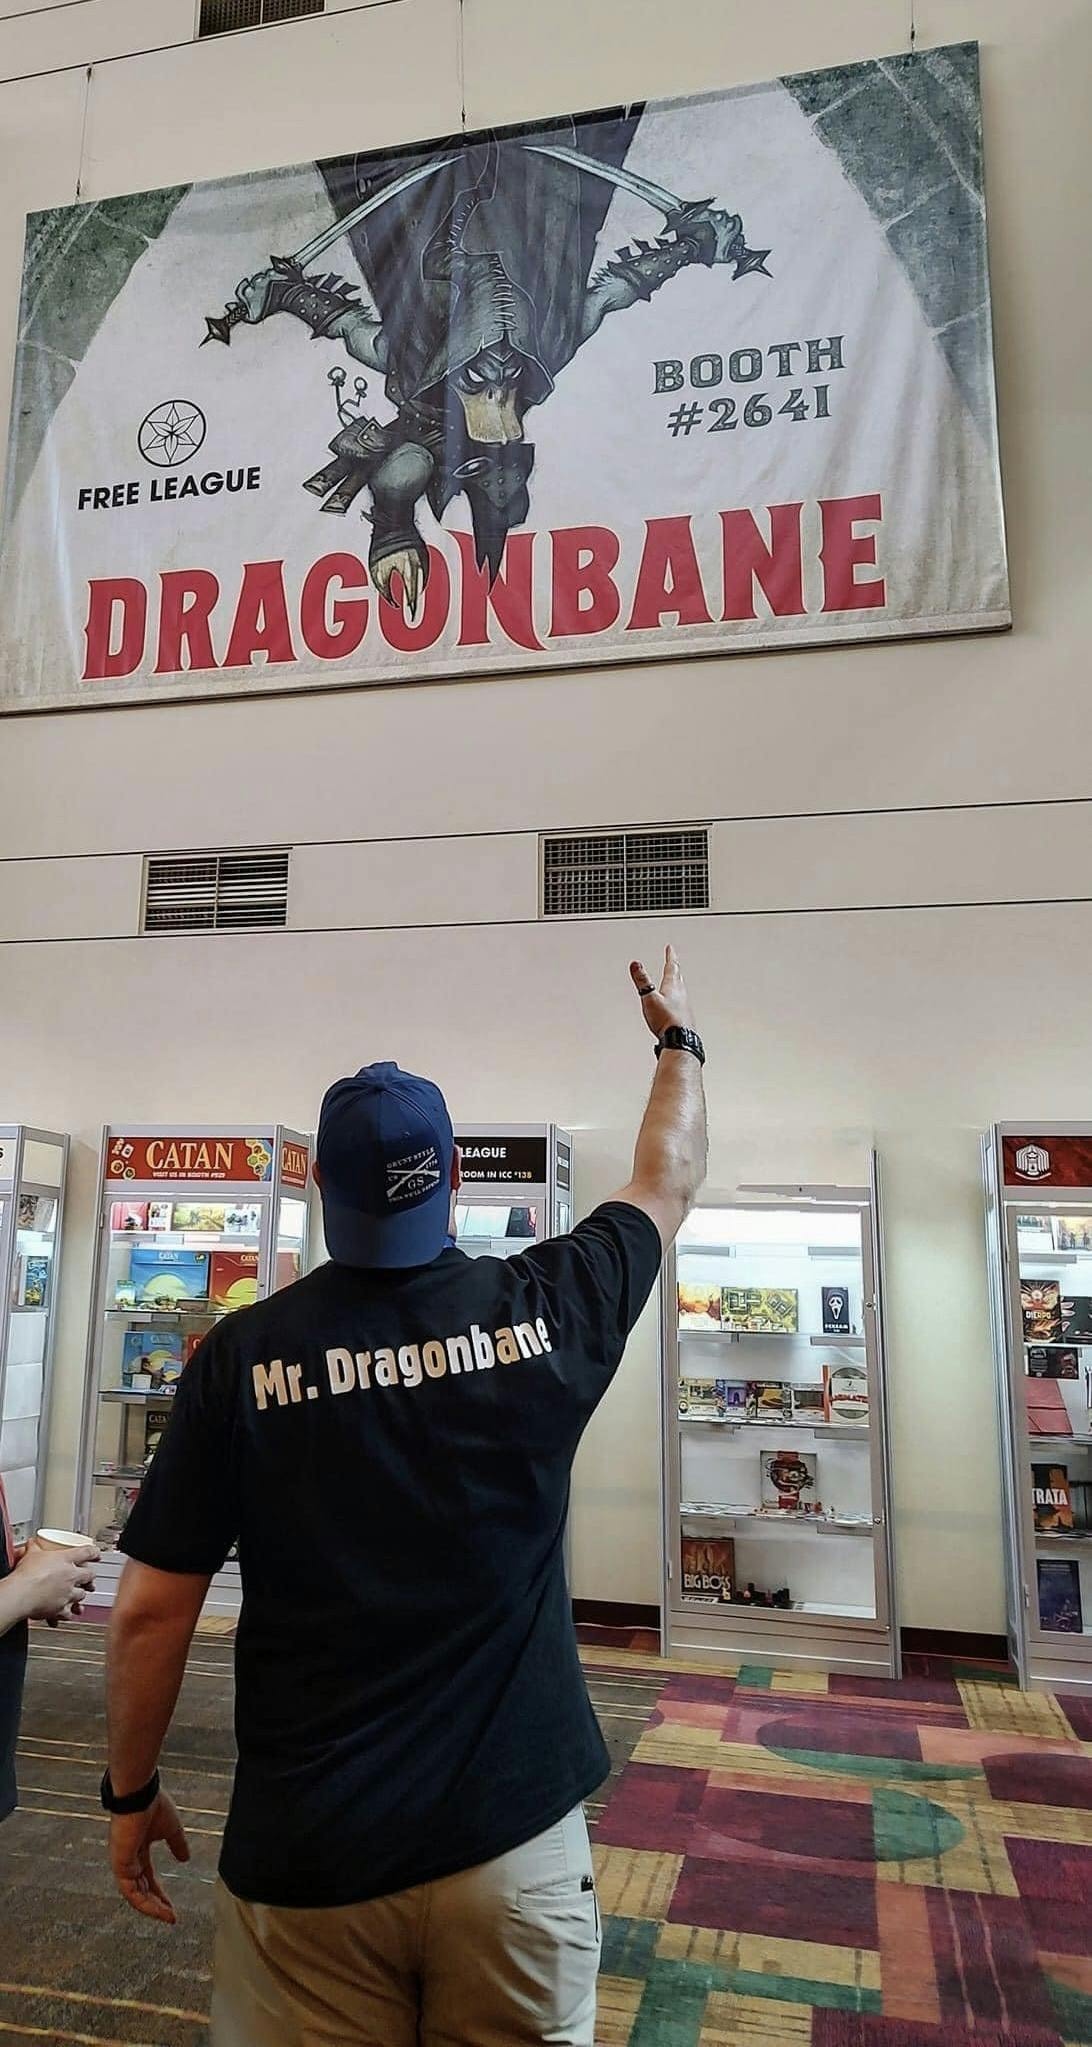 Mr. Dragonbane